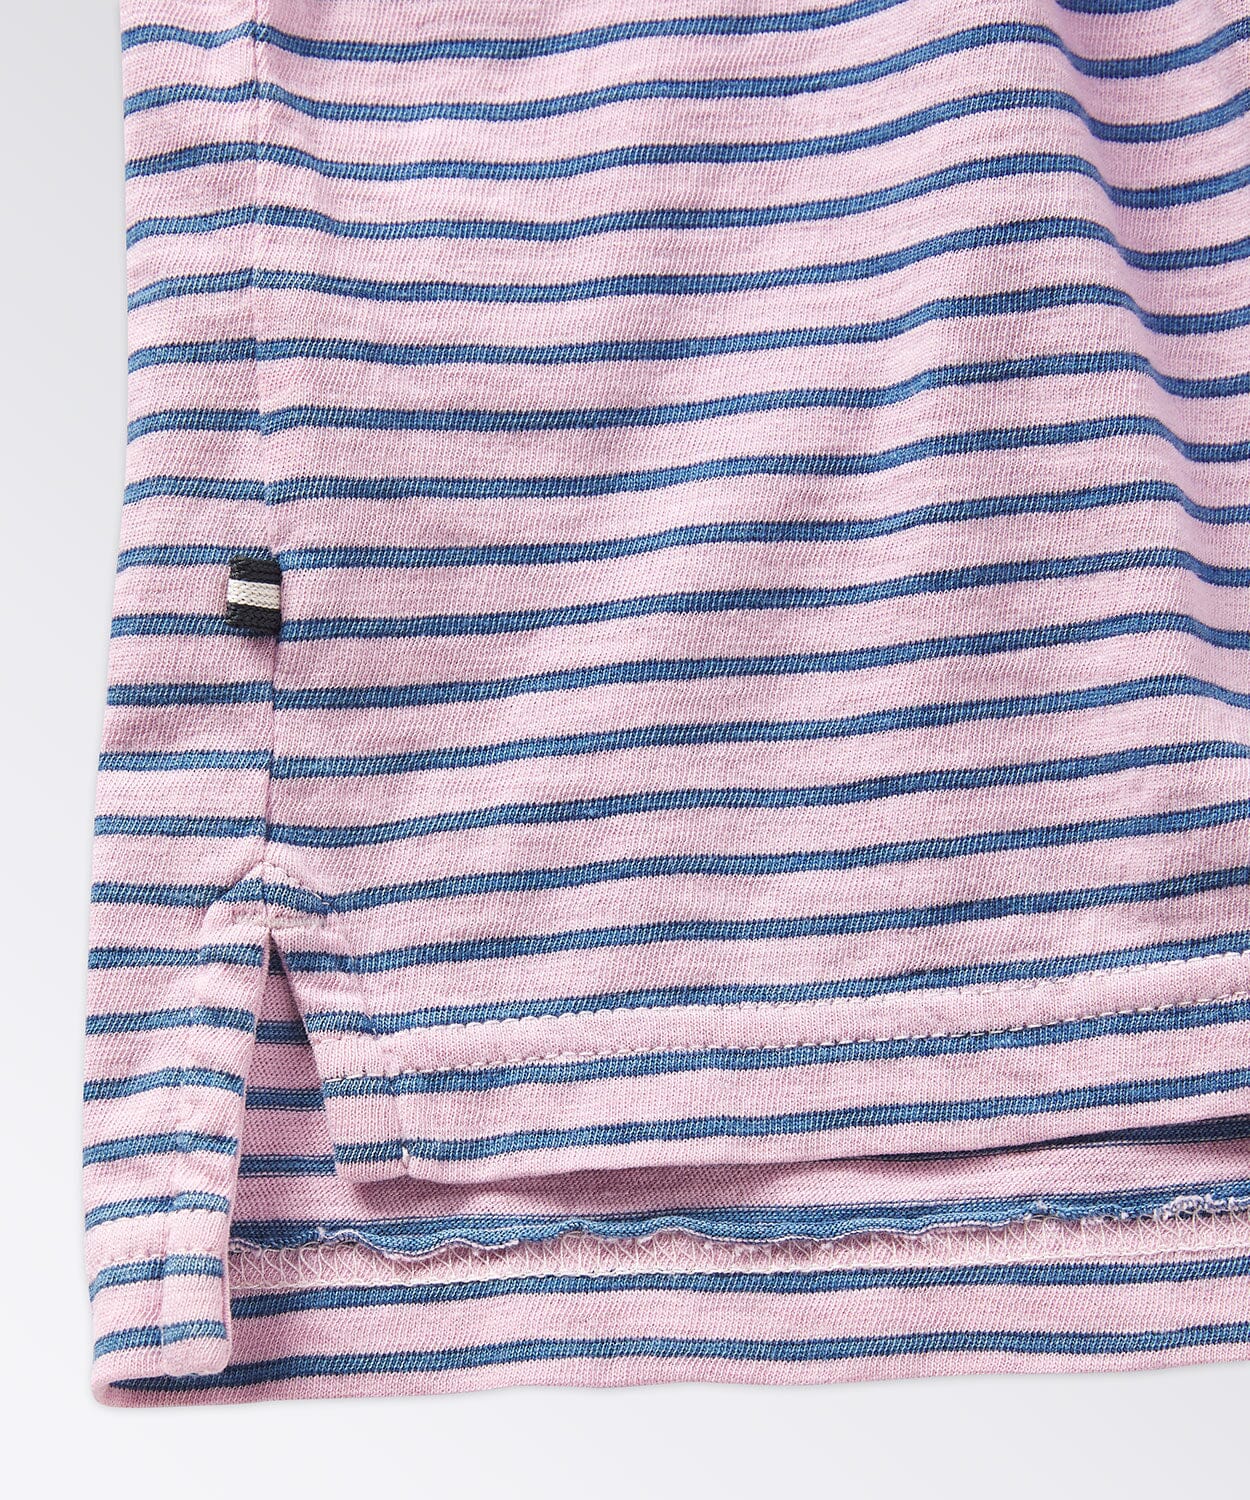 detail of a striped polo shirt